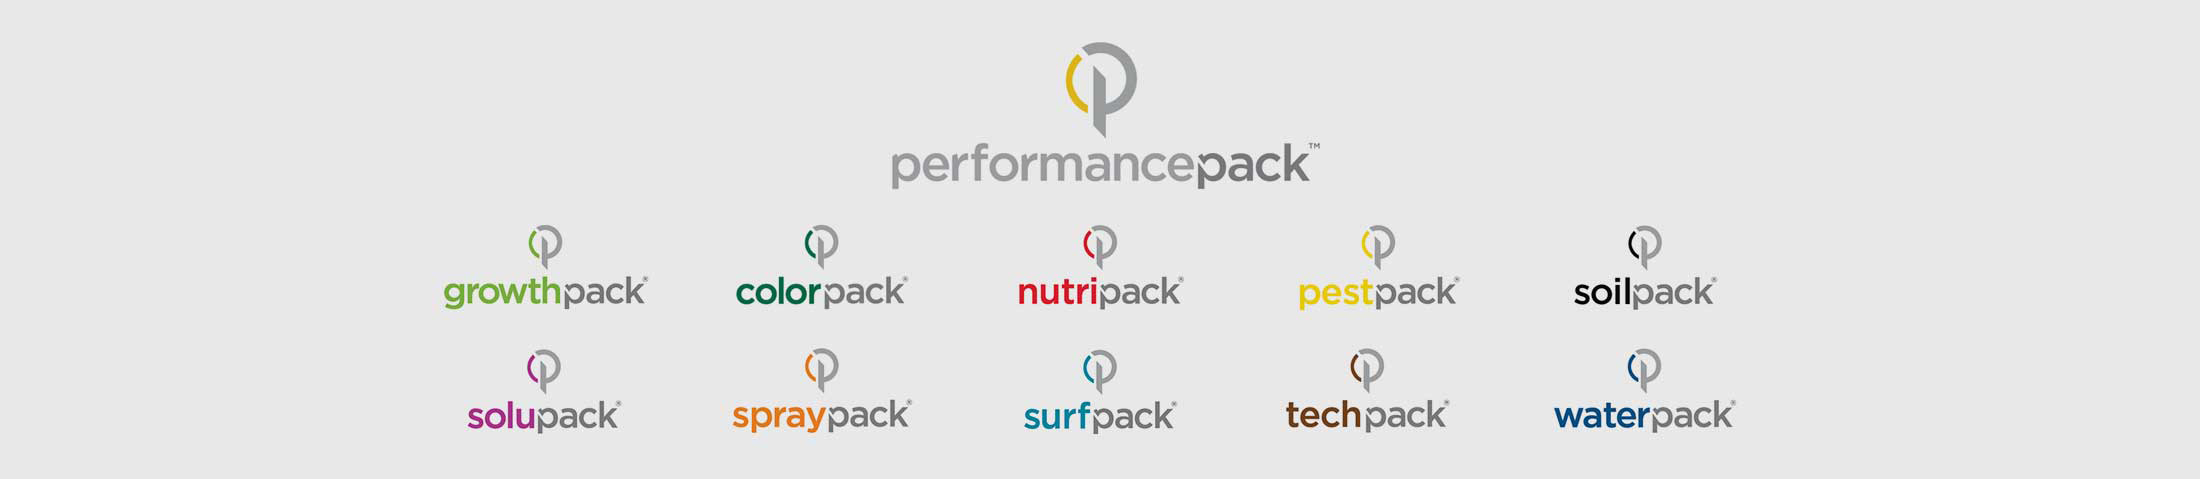 Simplot PerformancePack™